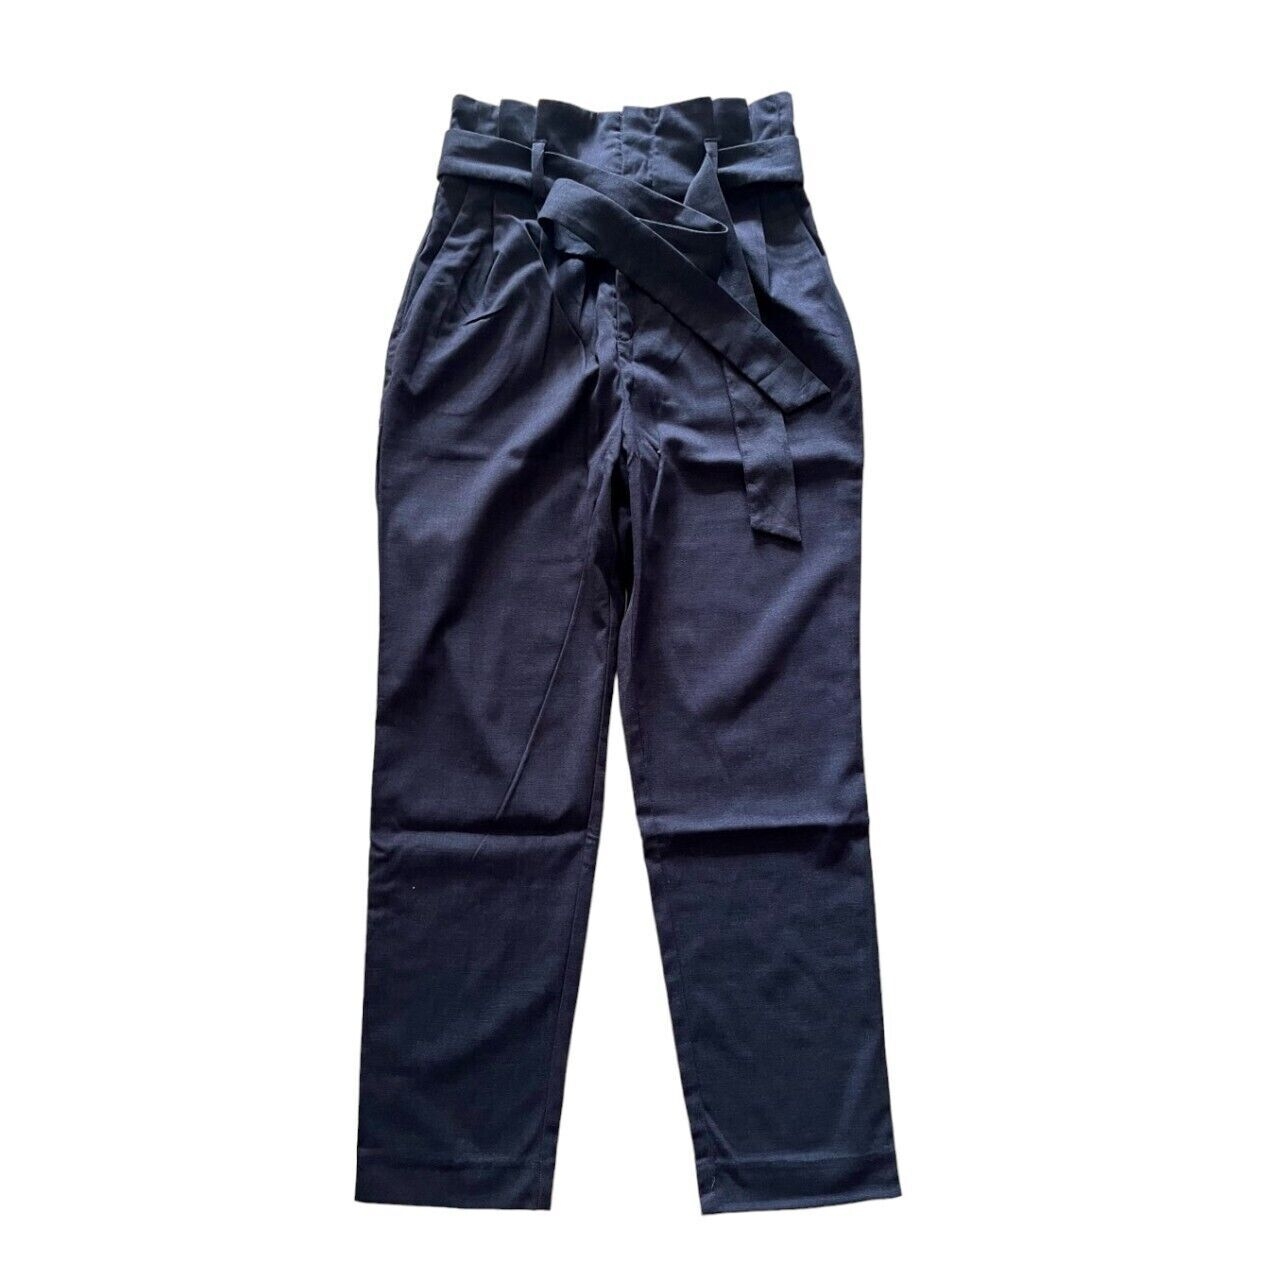 H&M Navy Long Pants